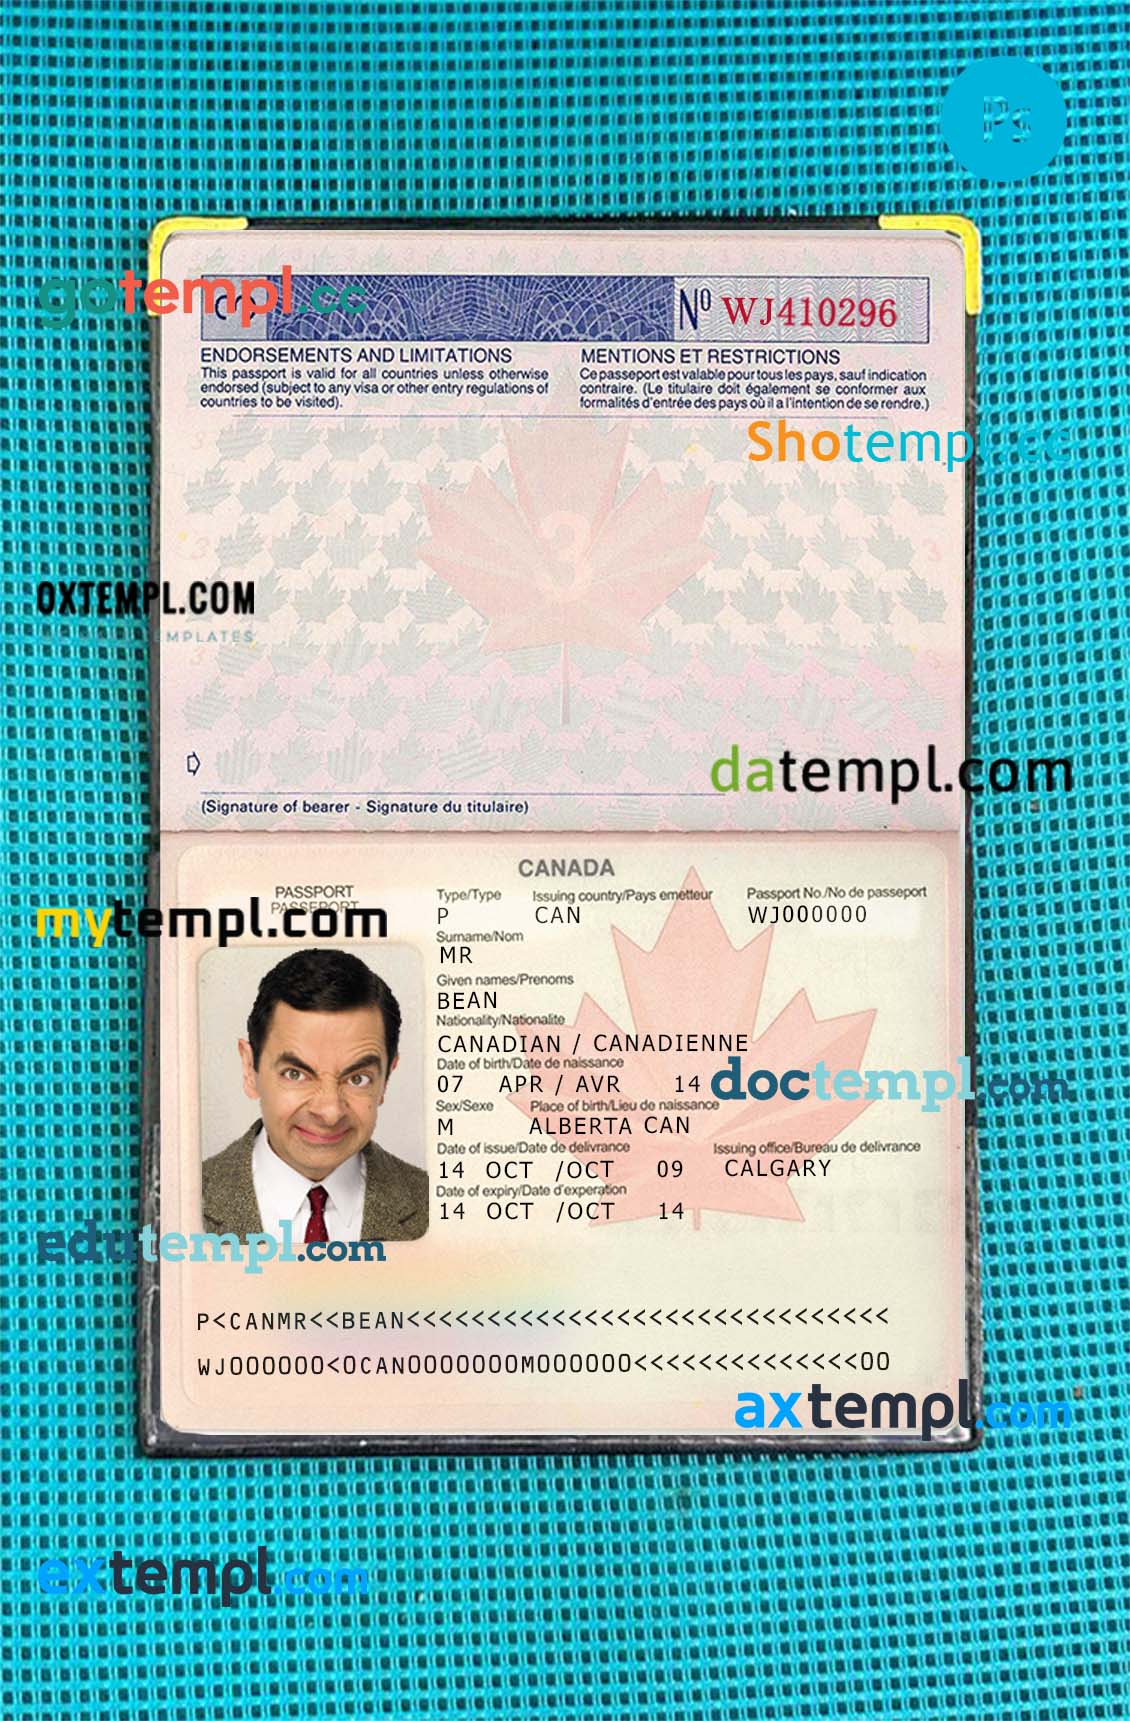 USA Popular, Inc. Bank visa card template in PSD format